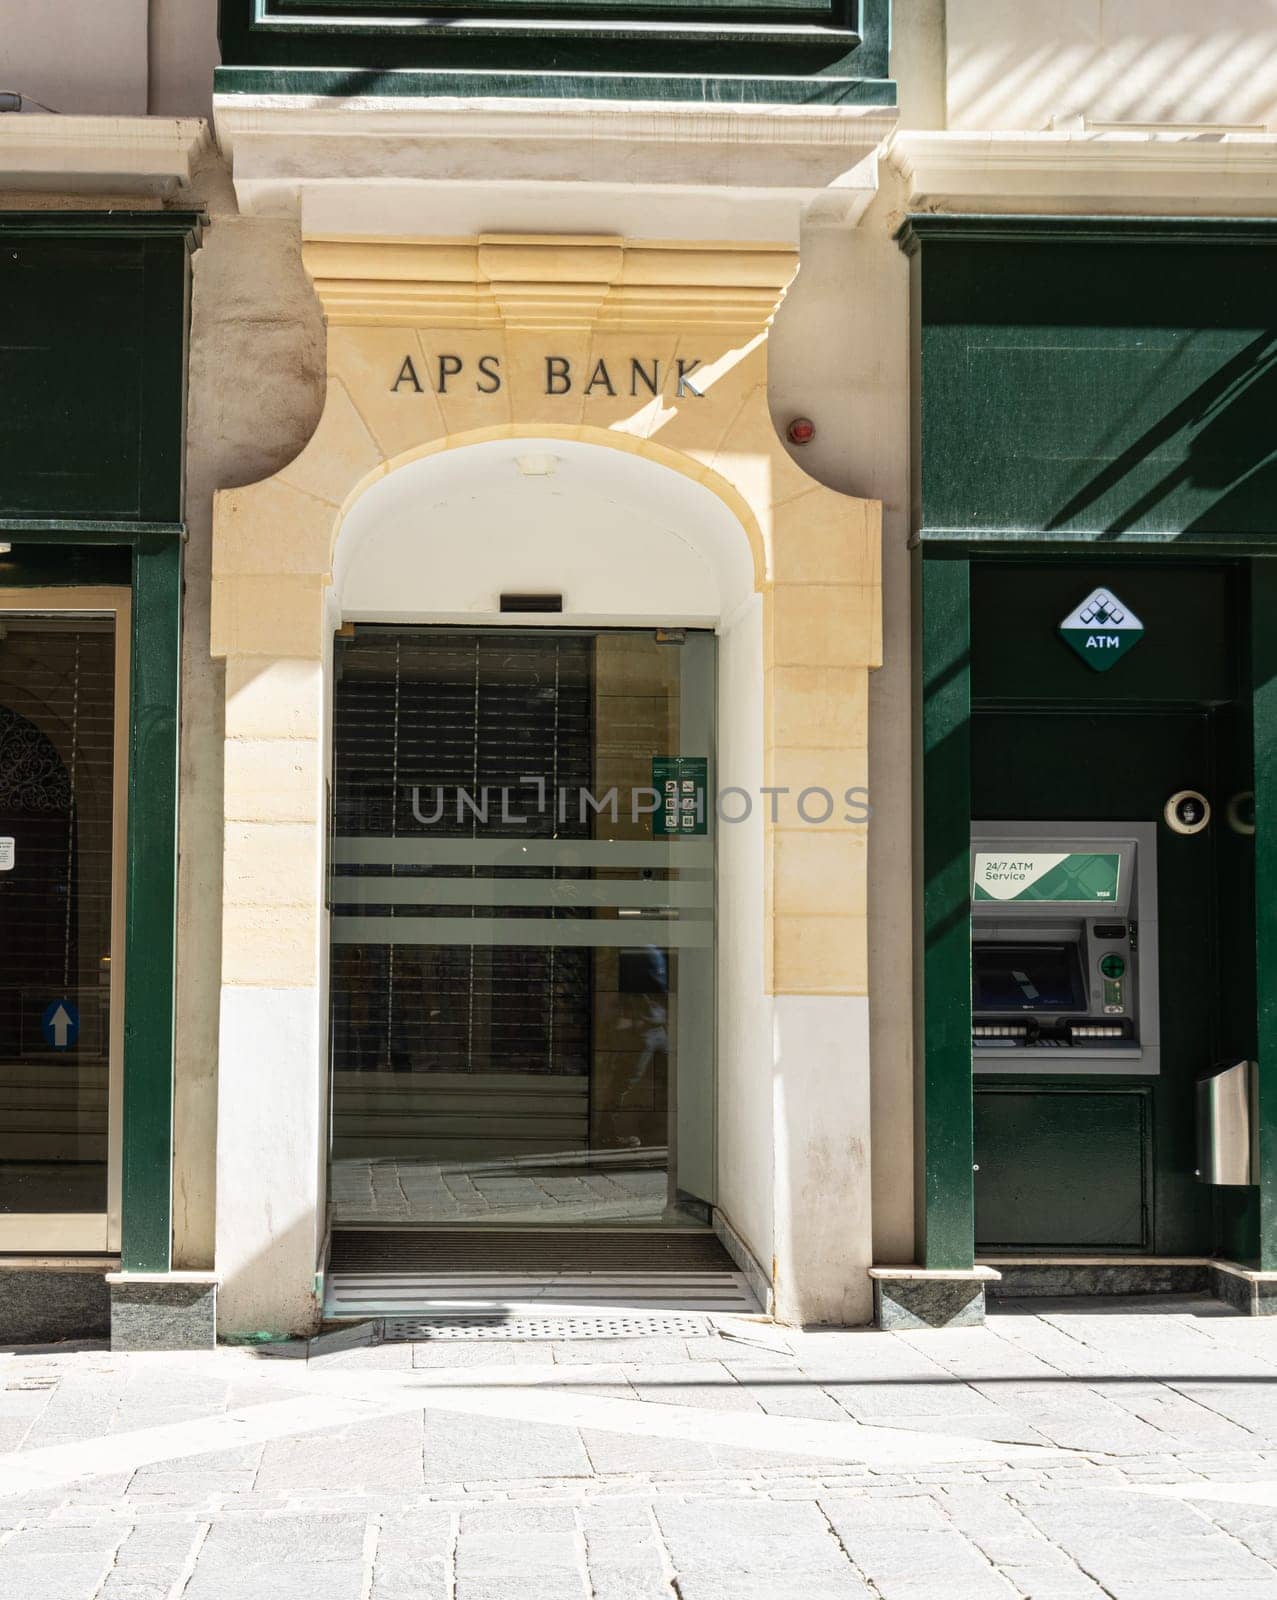 APS bank branch in Valletta, Malta by sergiodv